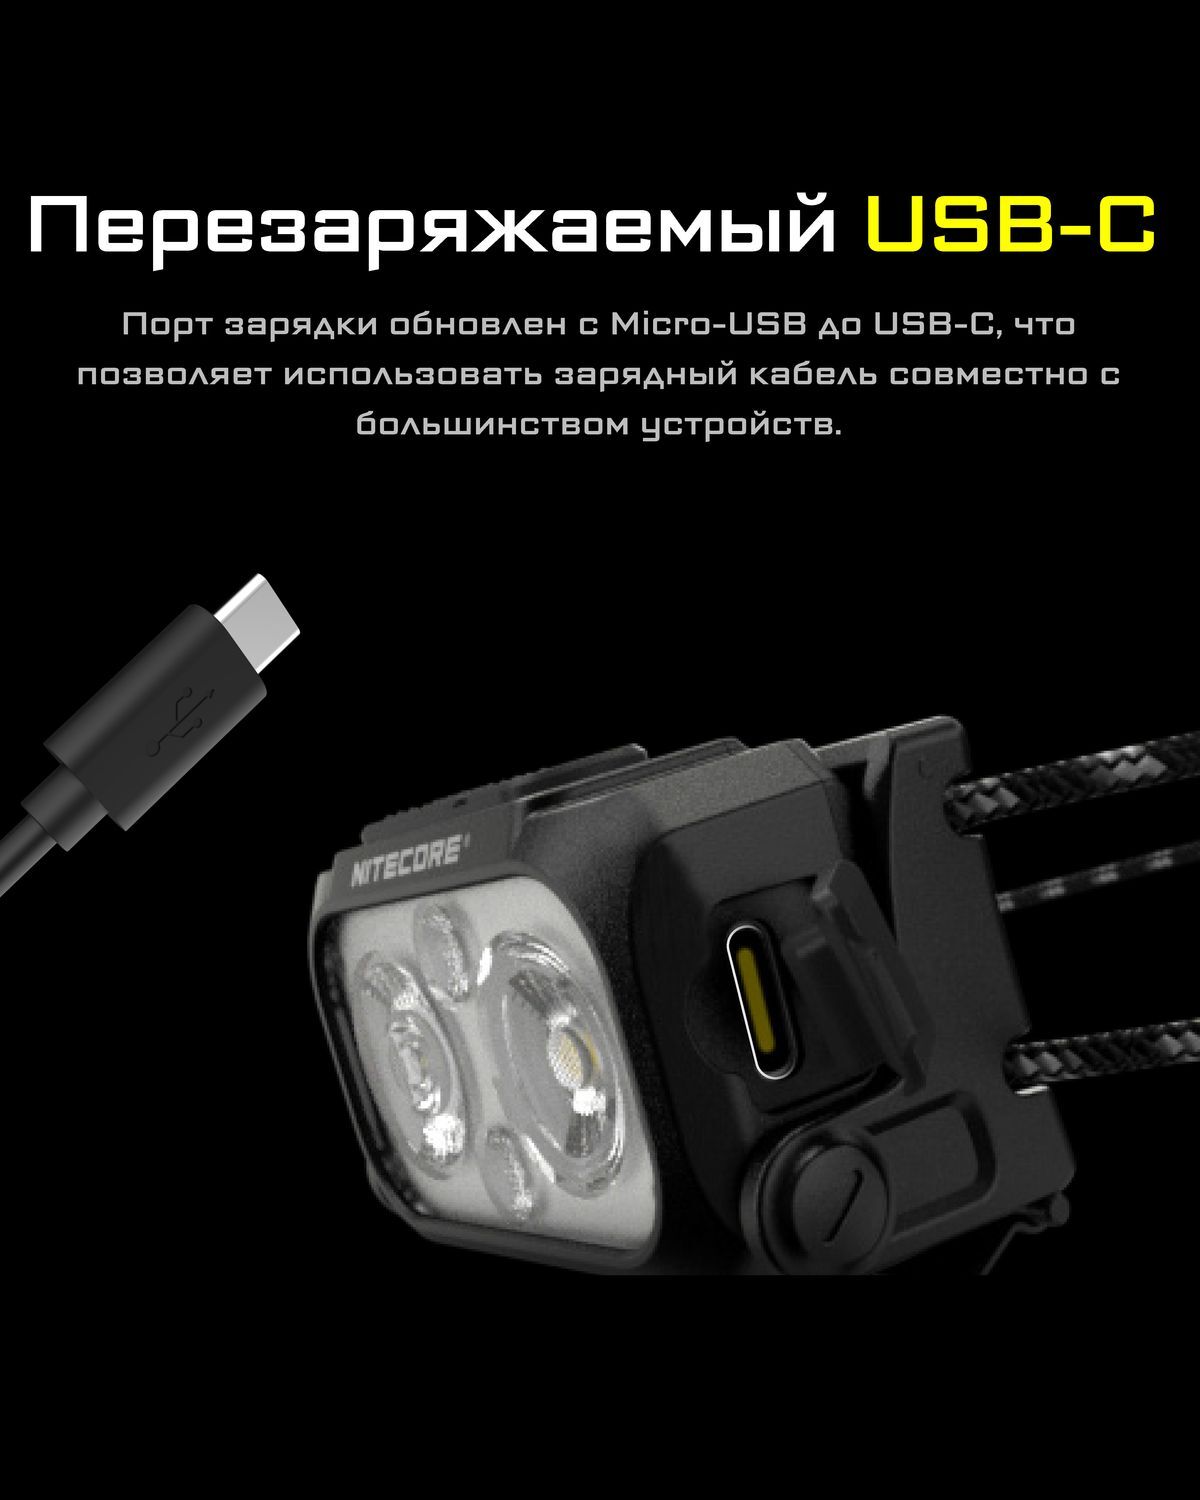 NU25 UL 400люмен 45часов 64м З/У USB-C АКБ Li-ion 3.7v 650mAh